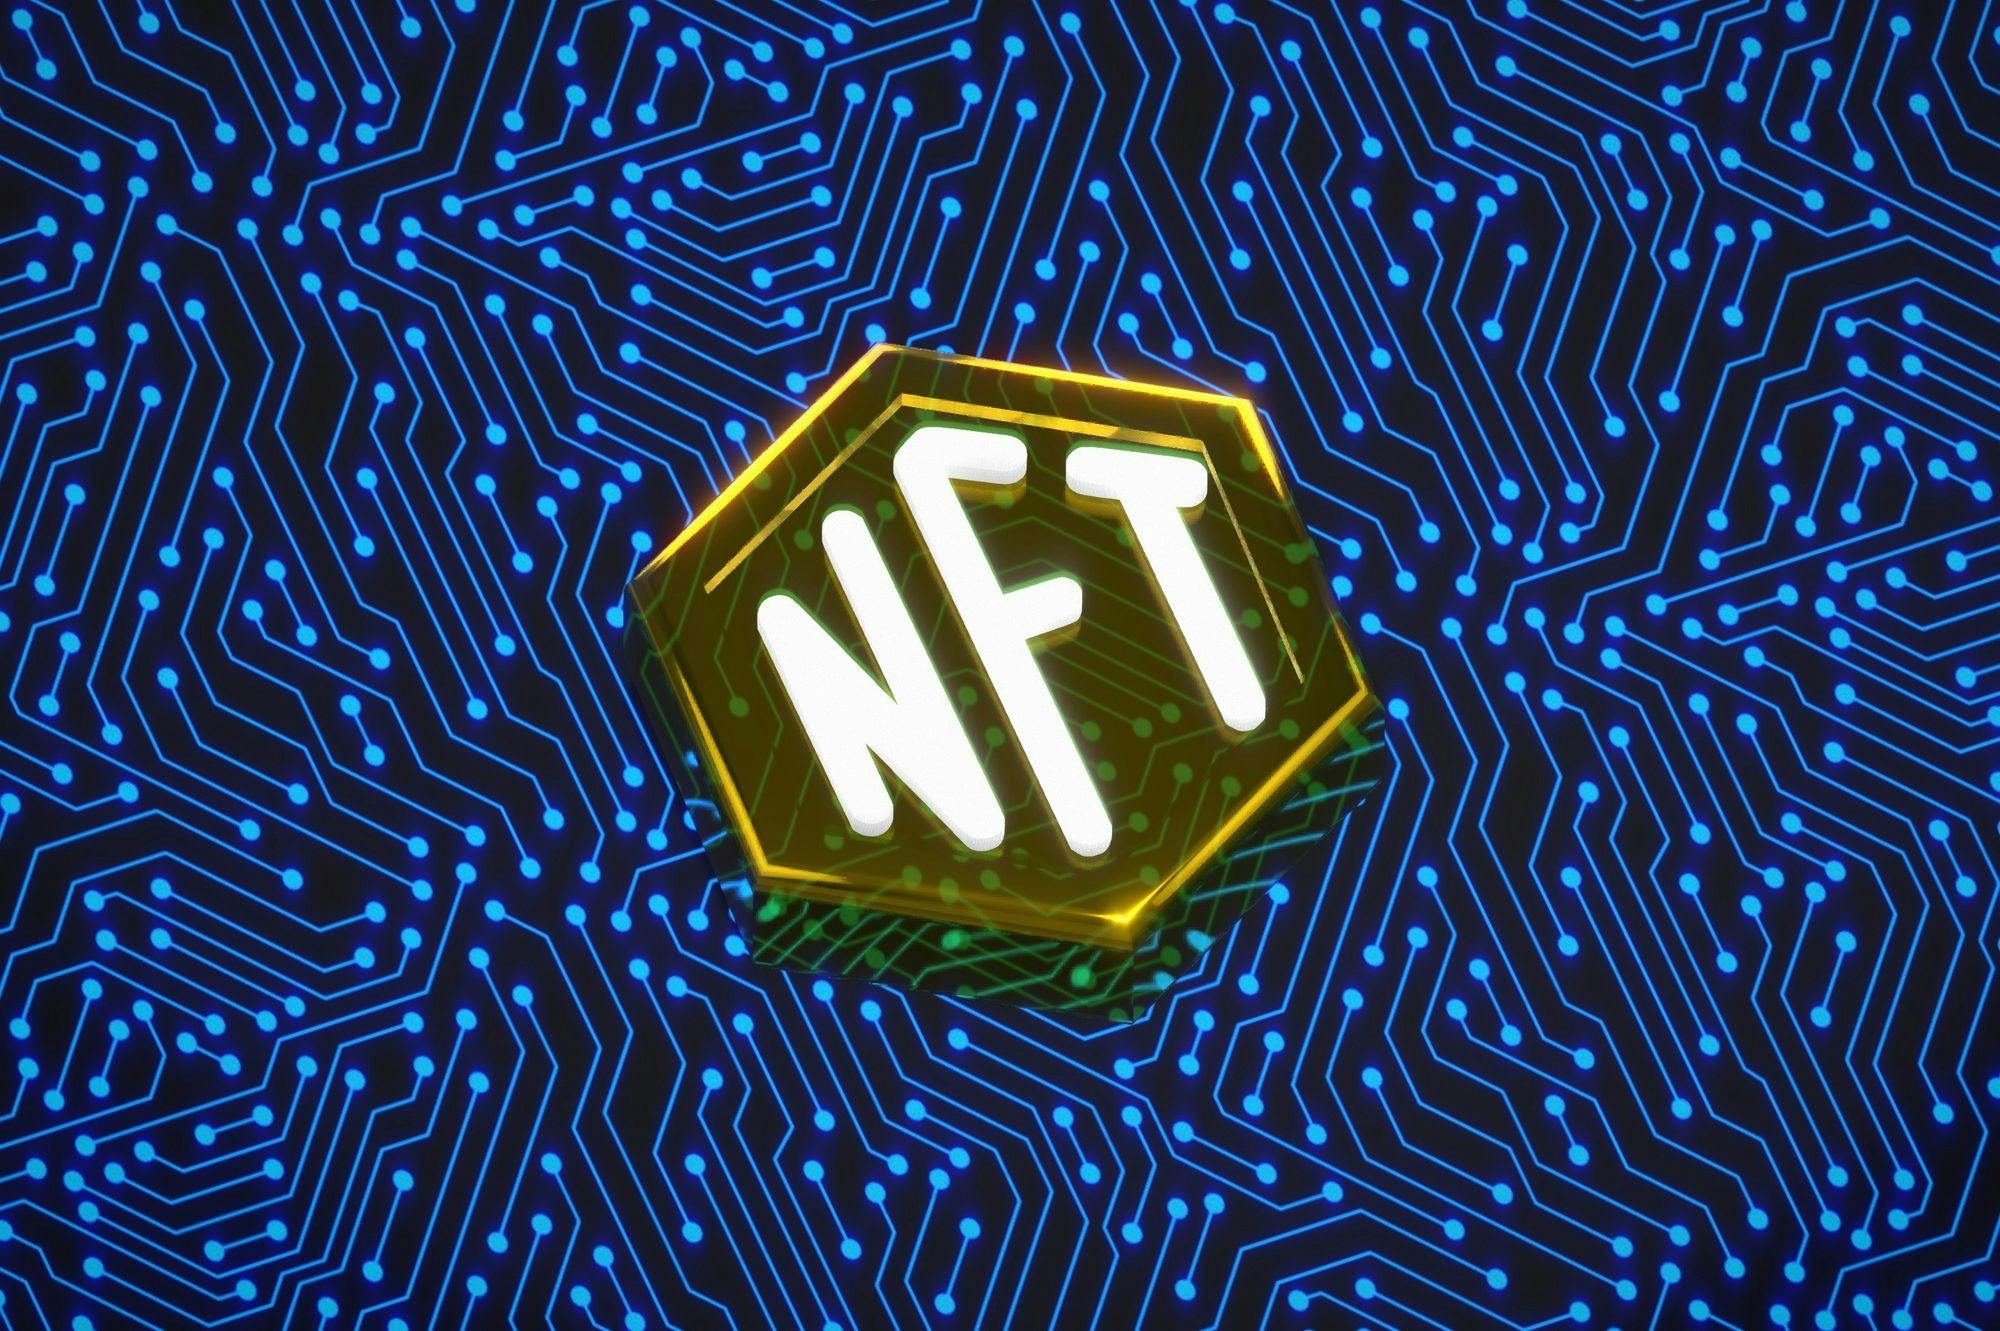 NFT Inscription in the Blockchain